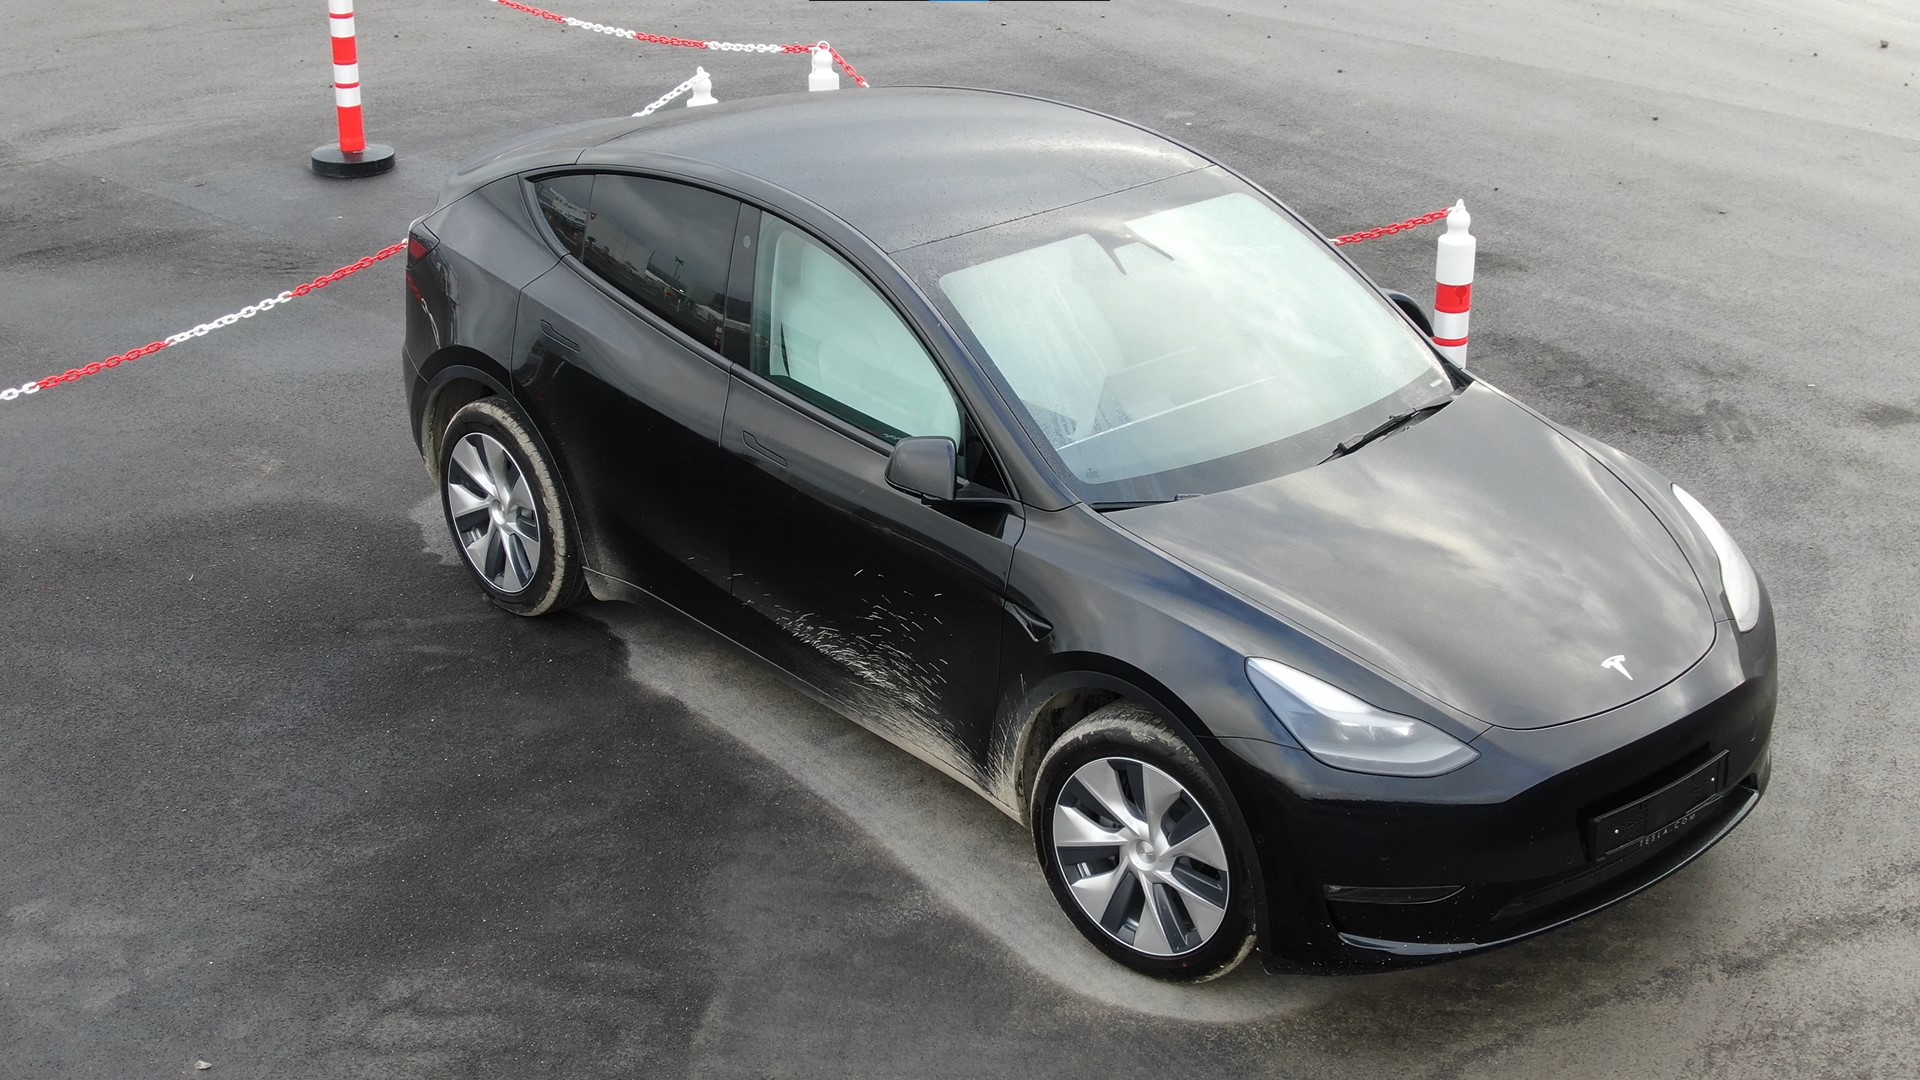 Pre-production Tesla Model Ys spotted outside Giga Berlin - Drive Tesla